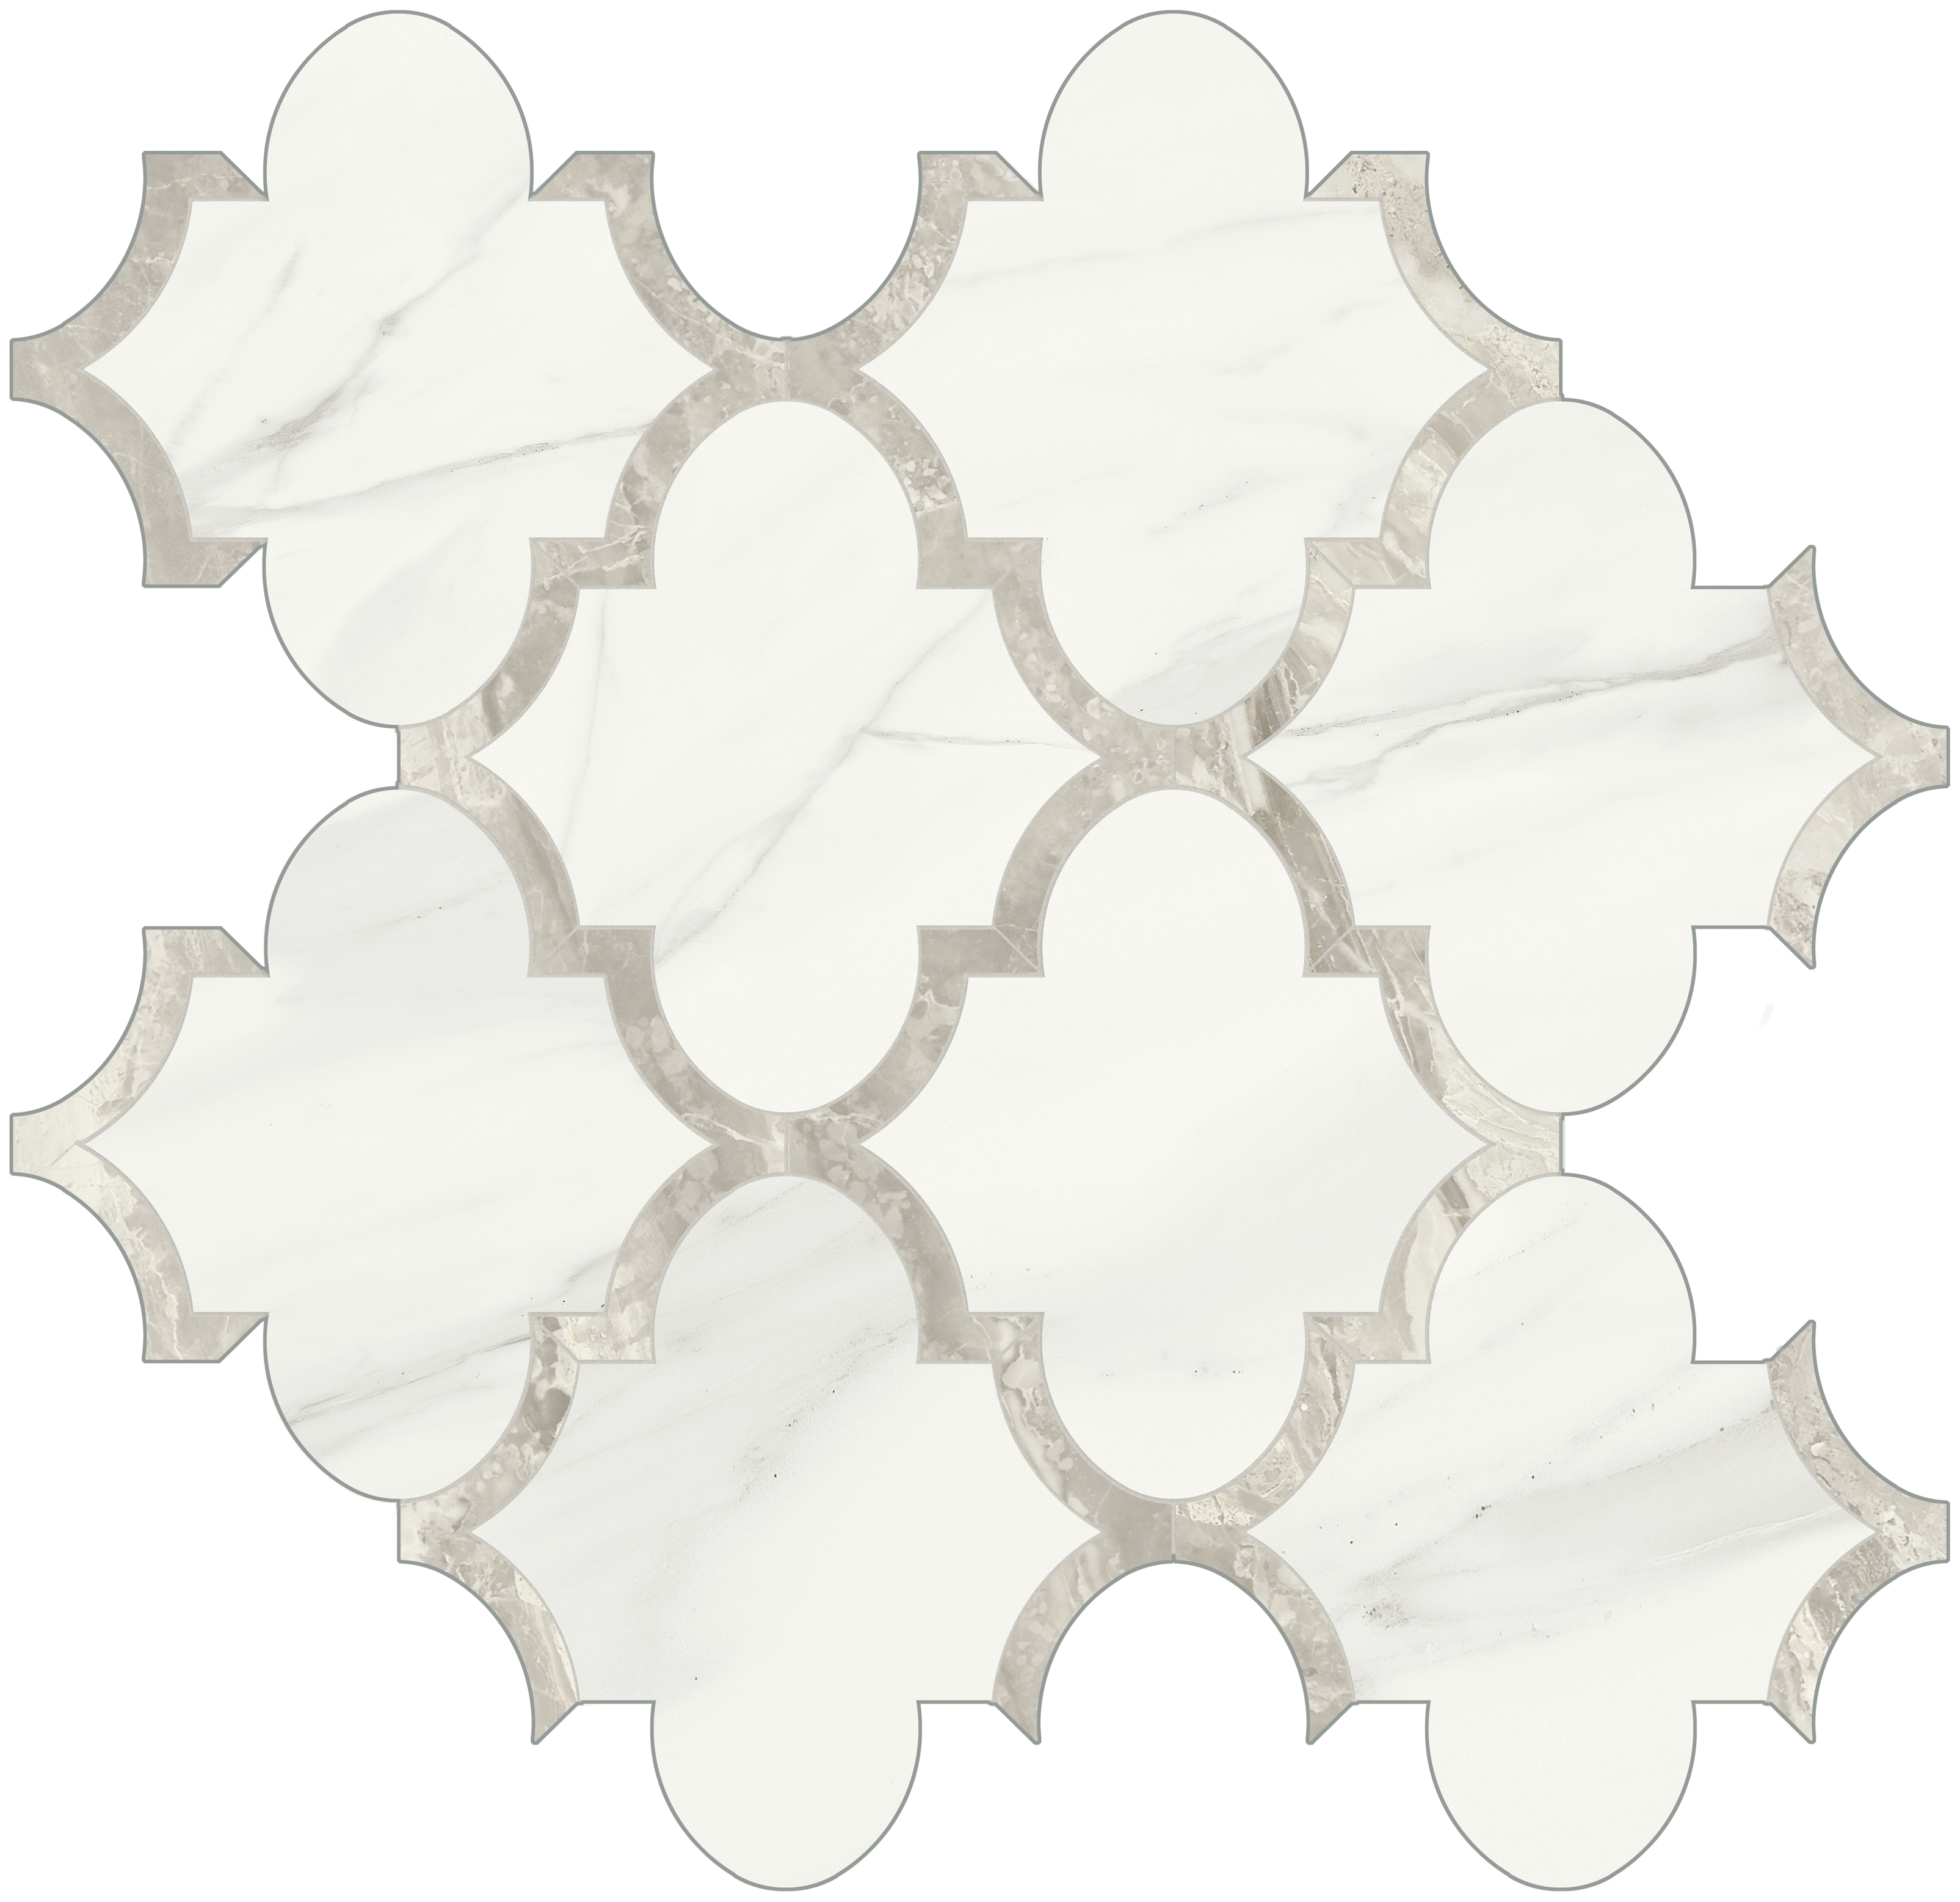 volakas grigio arabesque pattern glazed porcelain mosaic from mayfair anatolia collection distributed by surface group international polished finish straight edge edge mesh shape